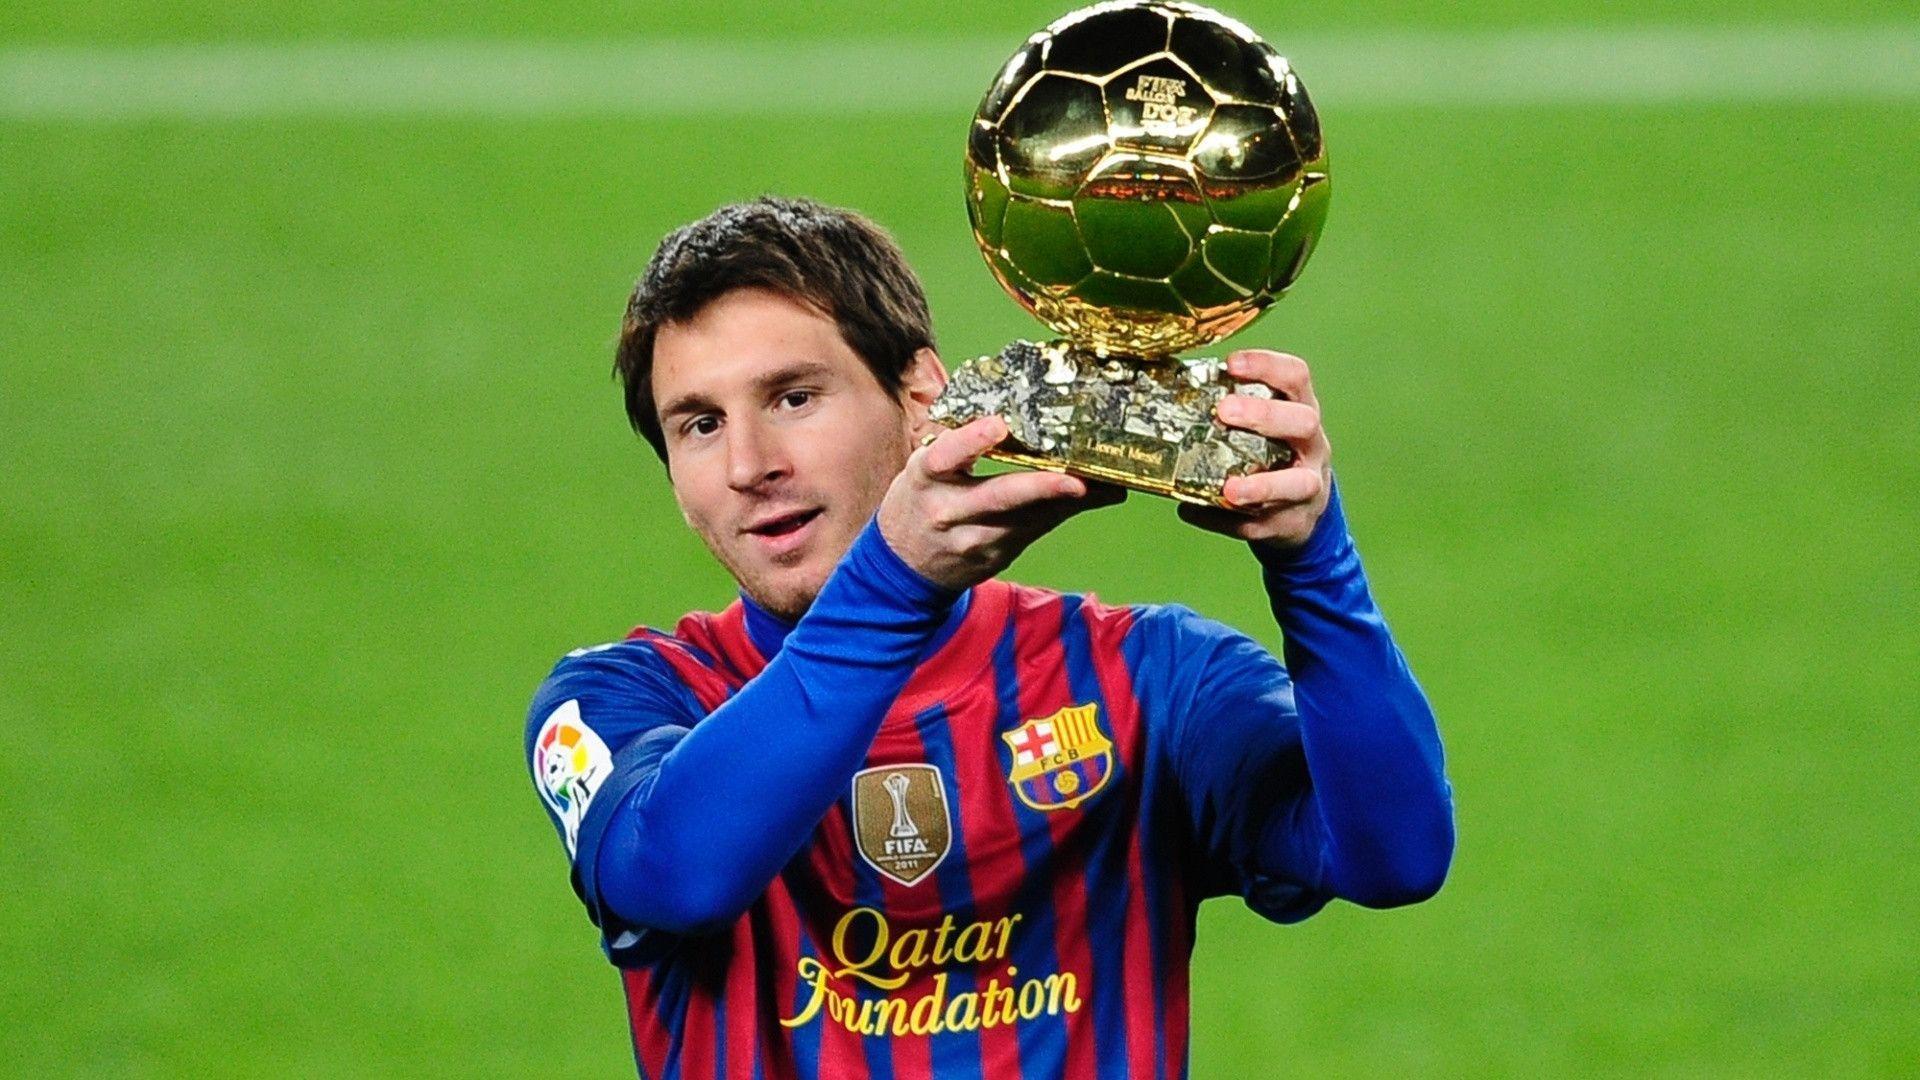 Lionel Messi Football Player Wallpaper. Foolhardi